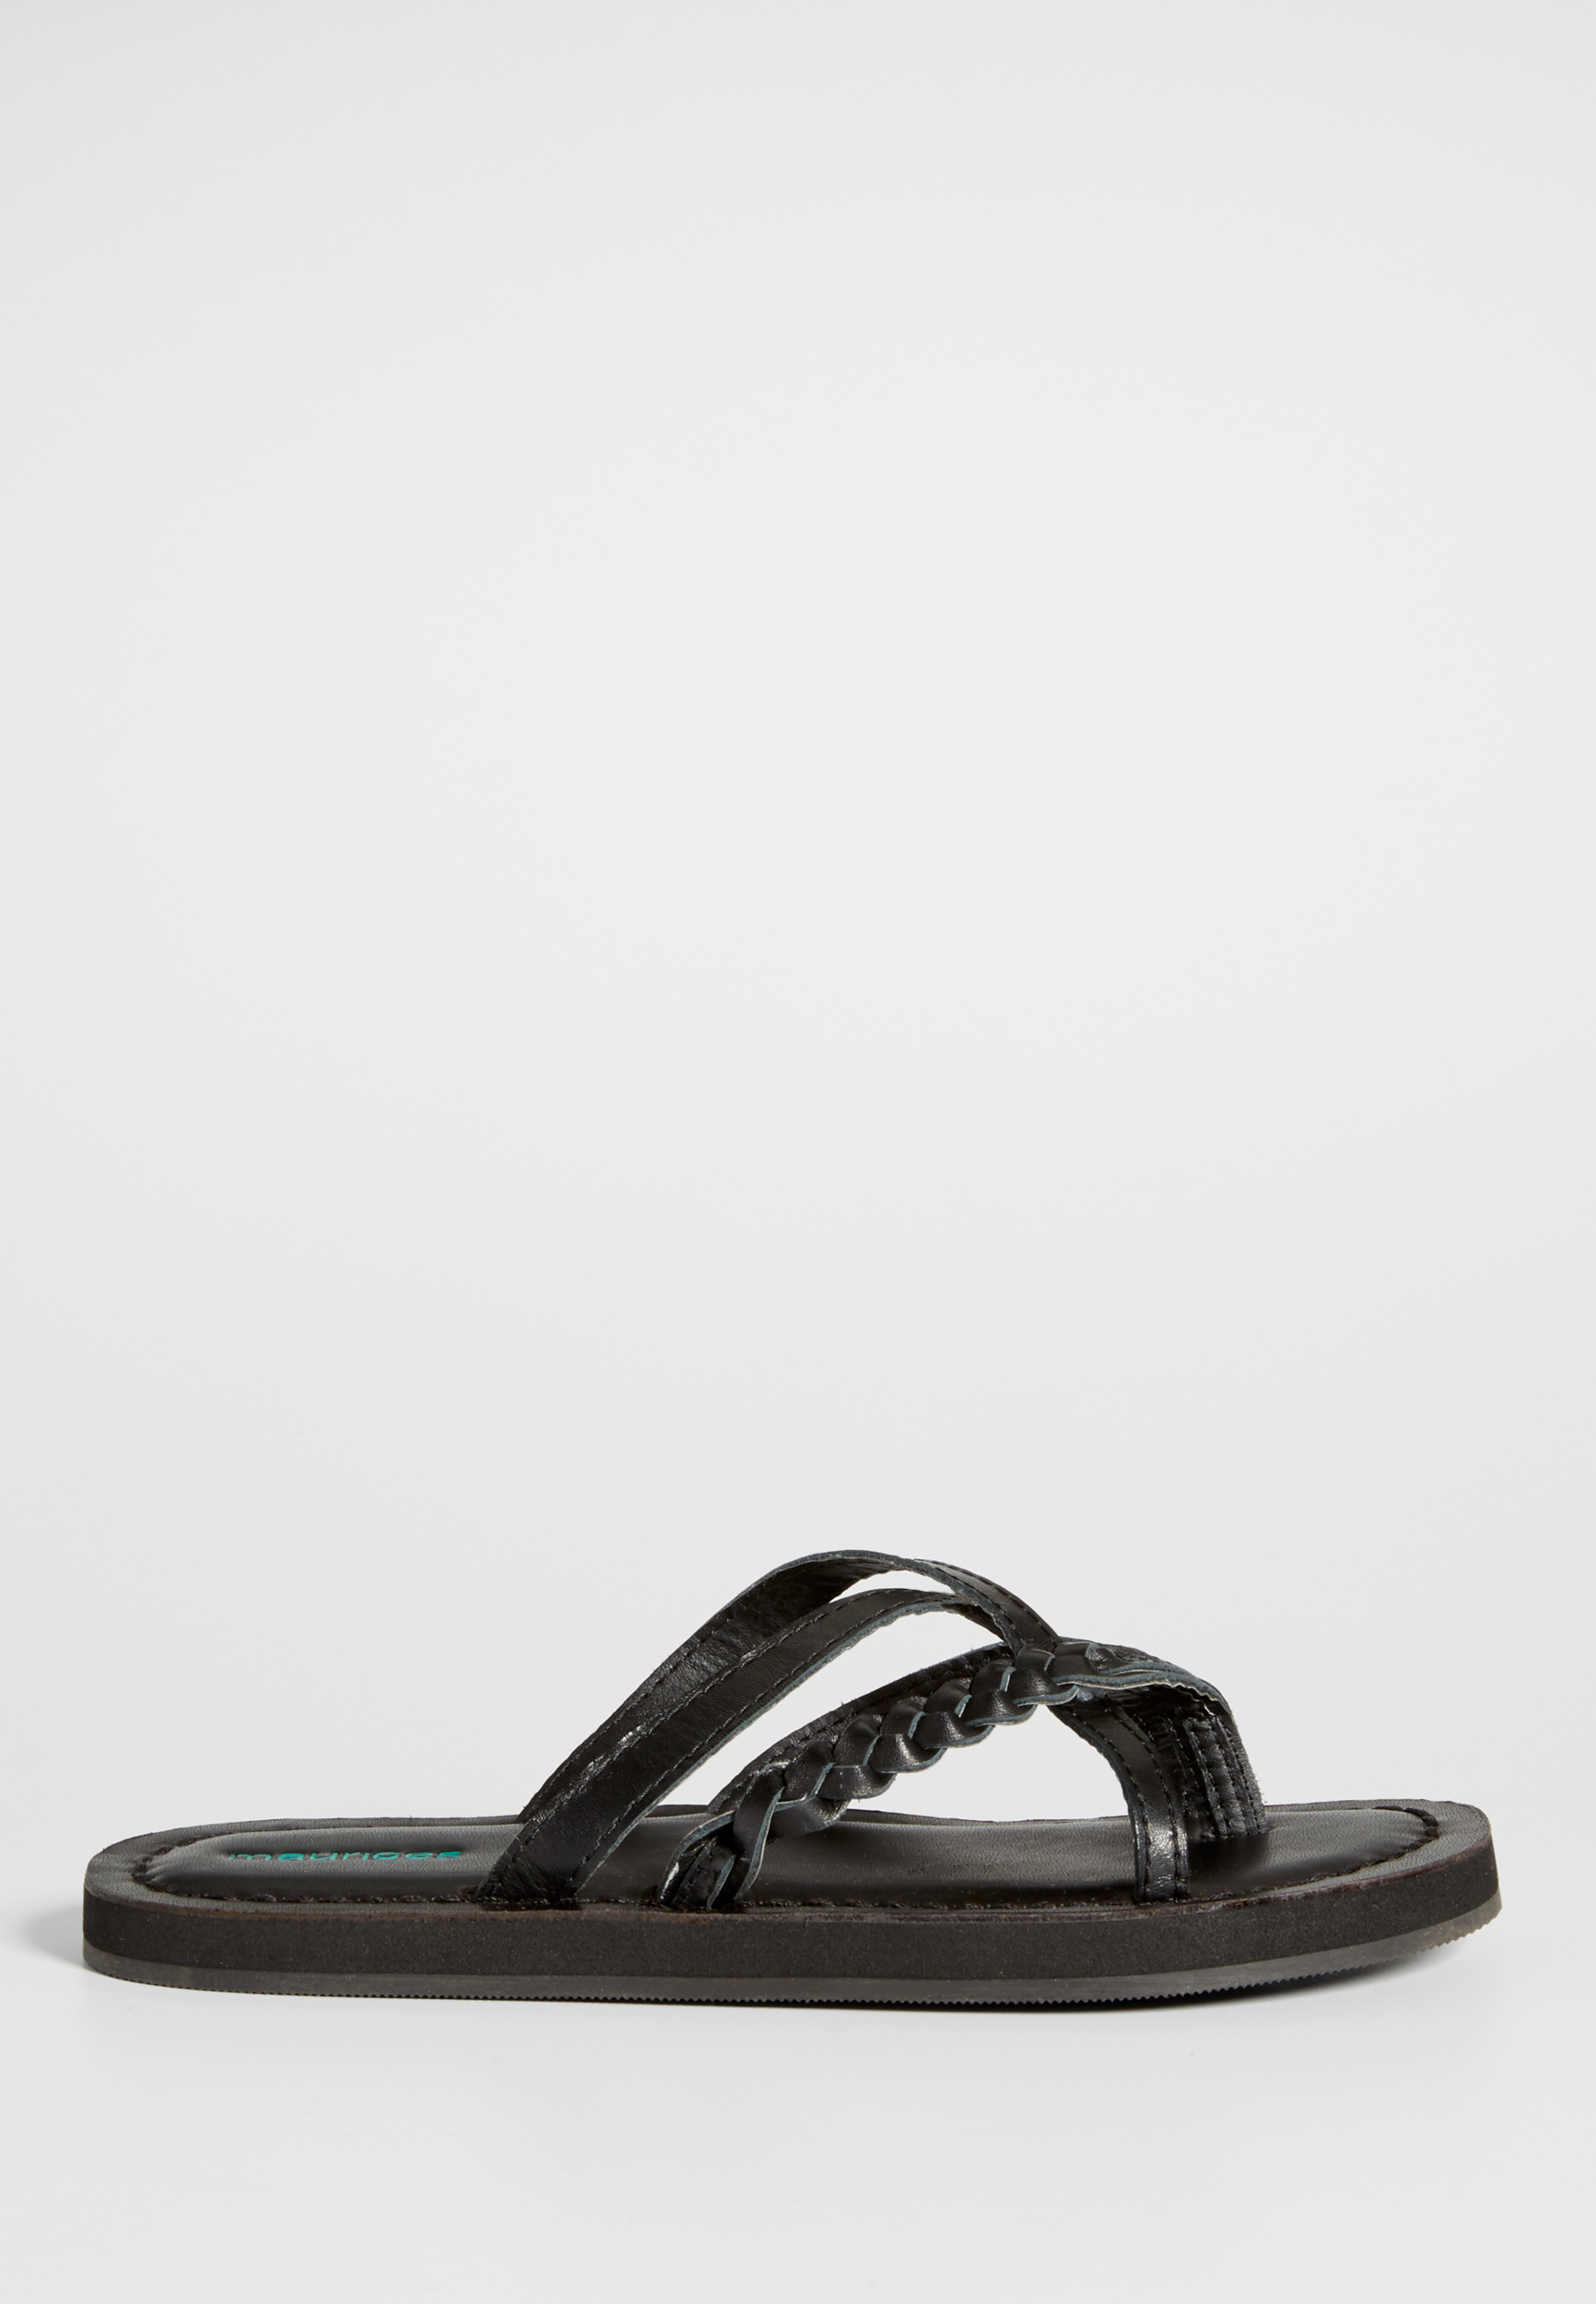 Reeva genuine leather cross strap sandal in black | maurices